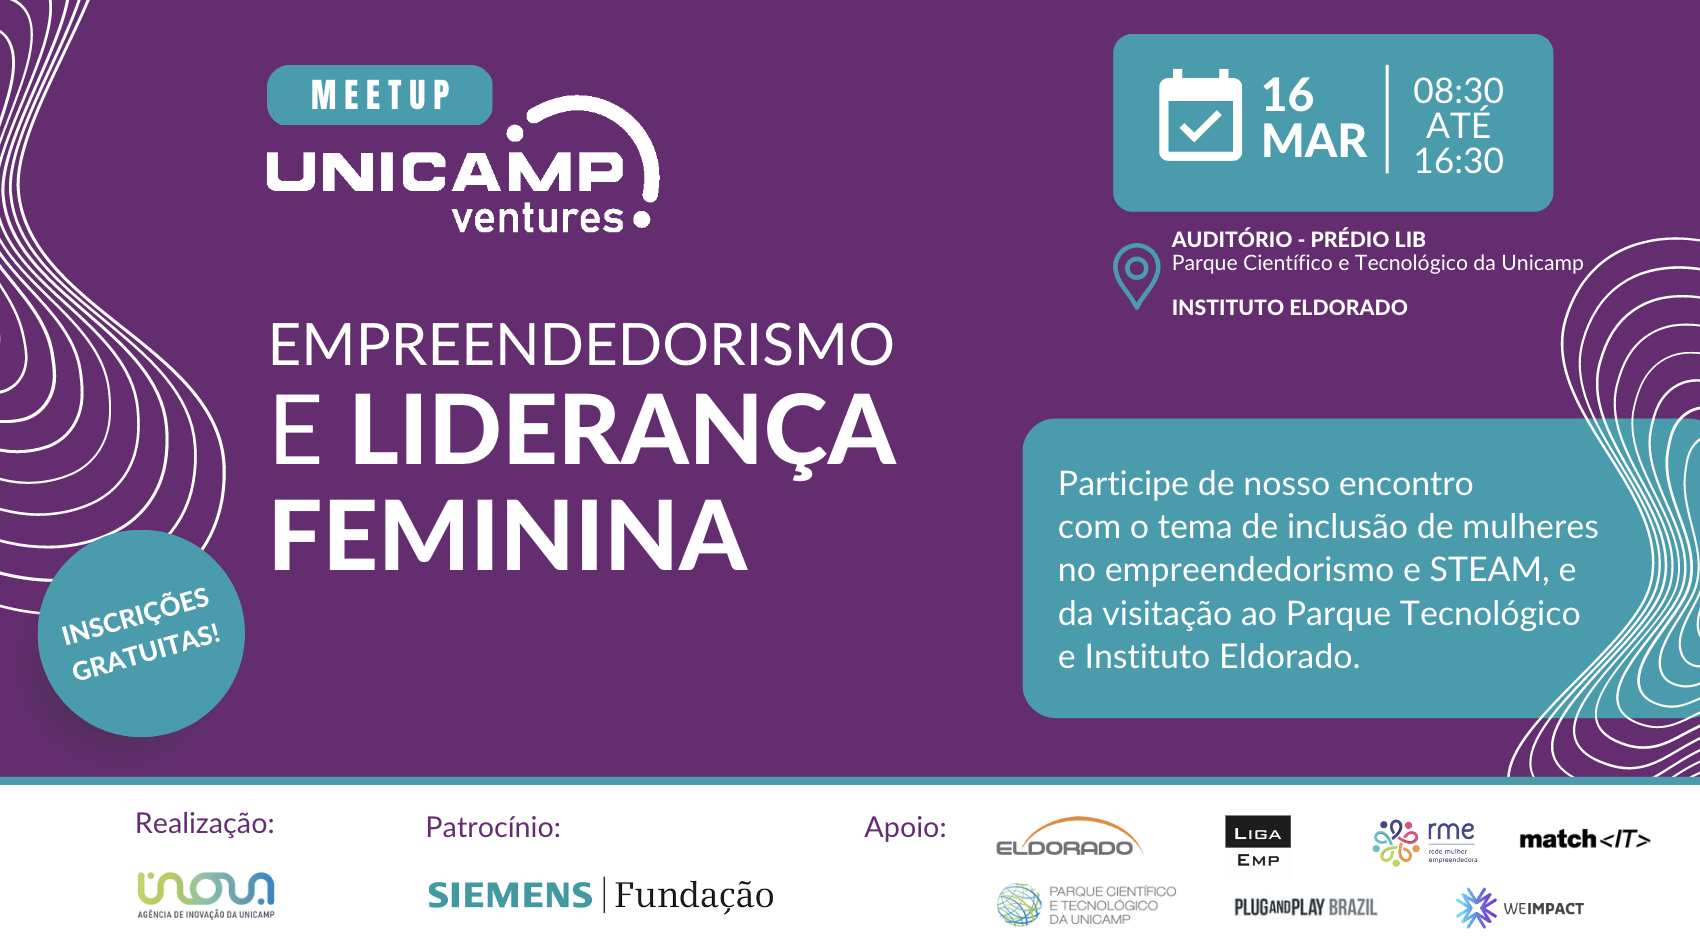 Live curso Empreendedorismo Digital Feminino - Instituto Comradio